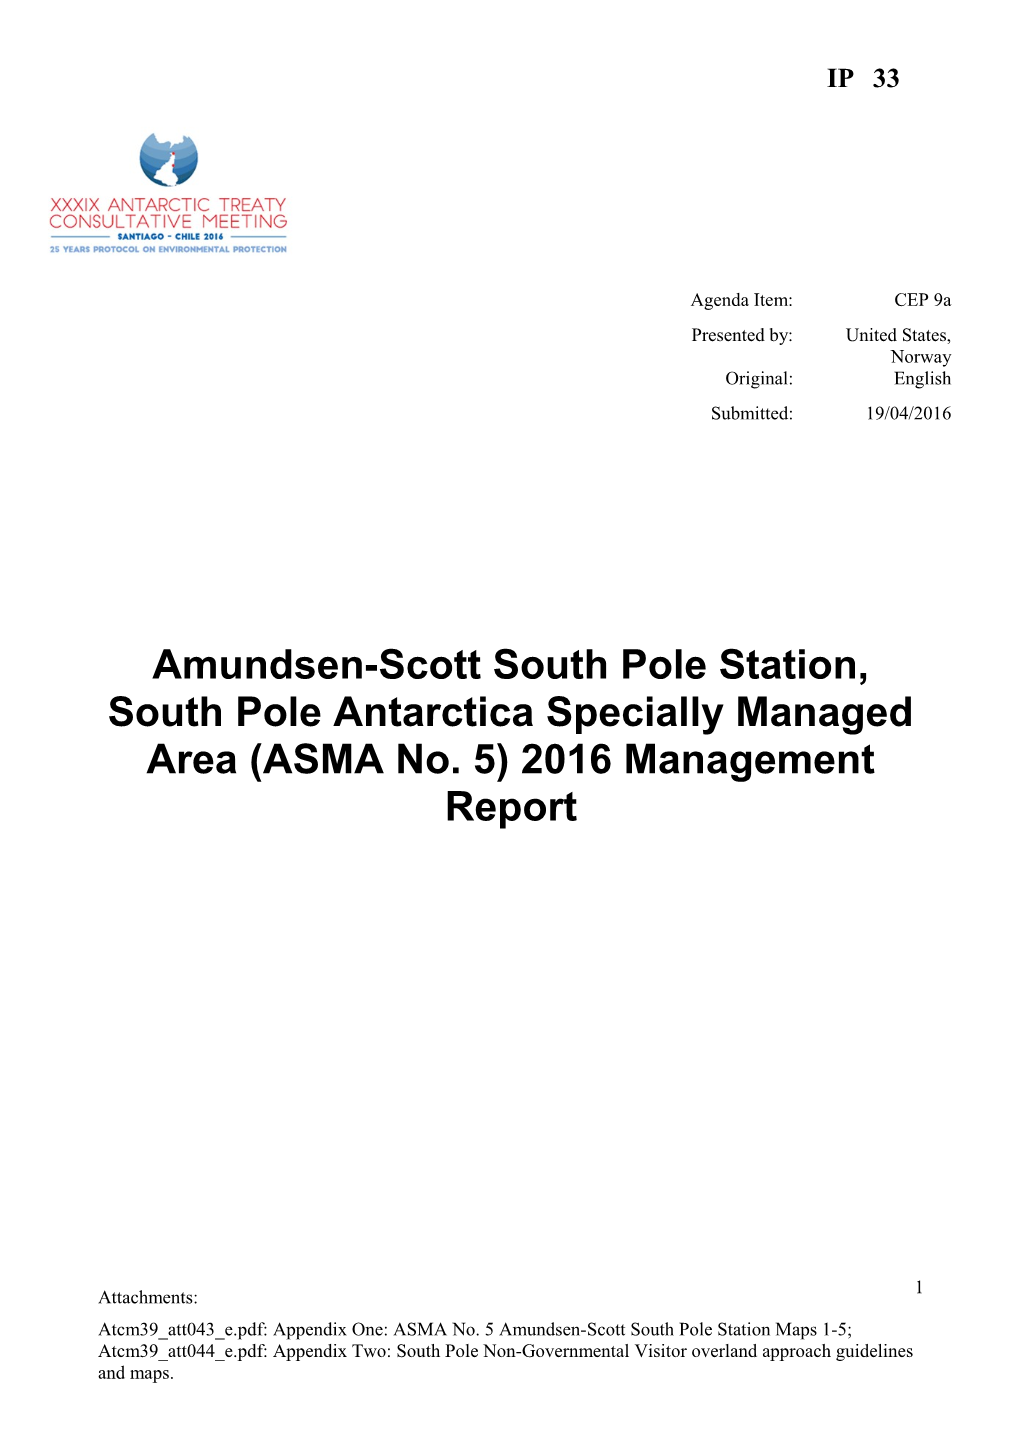 Amundsen-Scott South Pole Station, South Pole Antarctica Specially Managed Area (ASMA